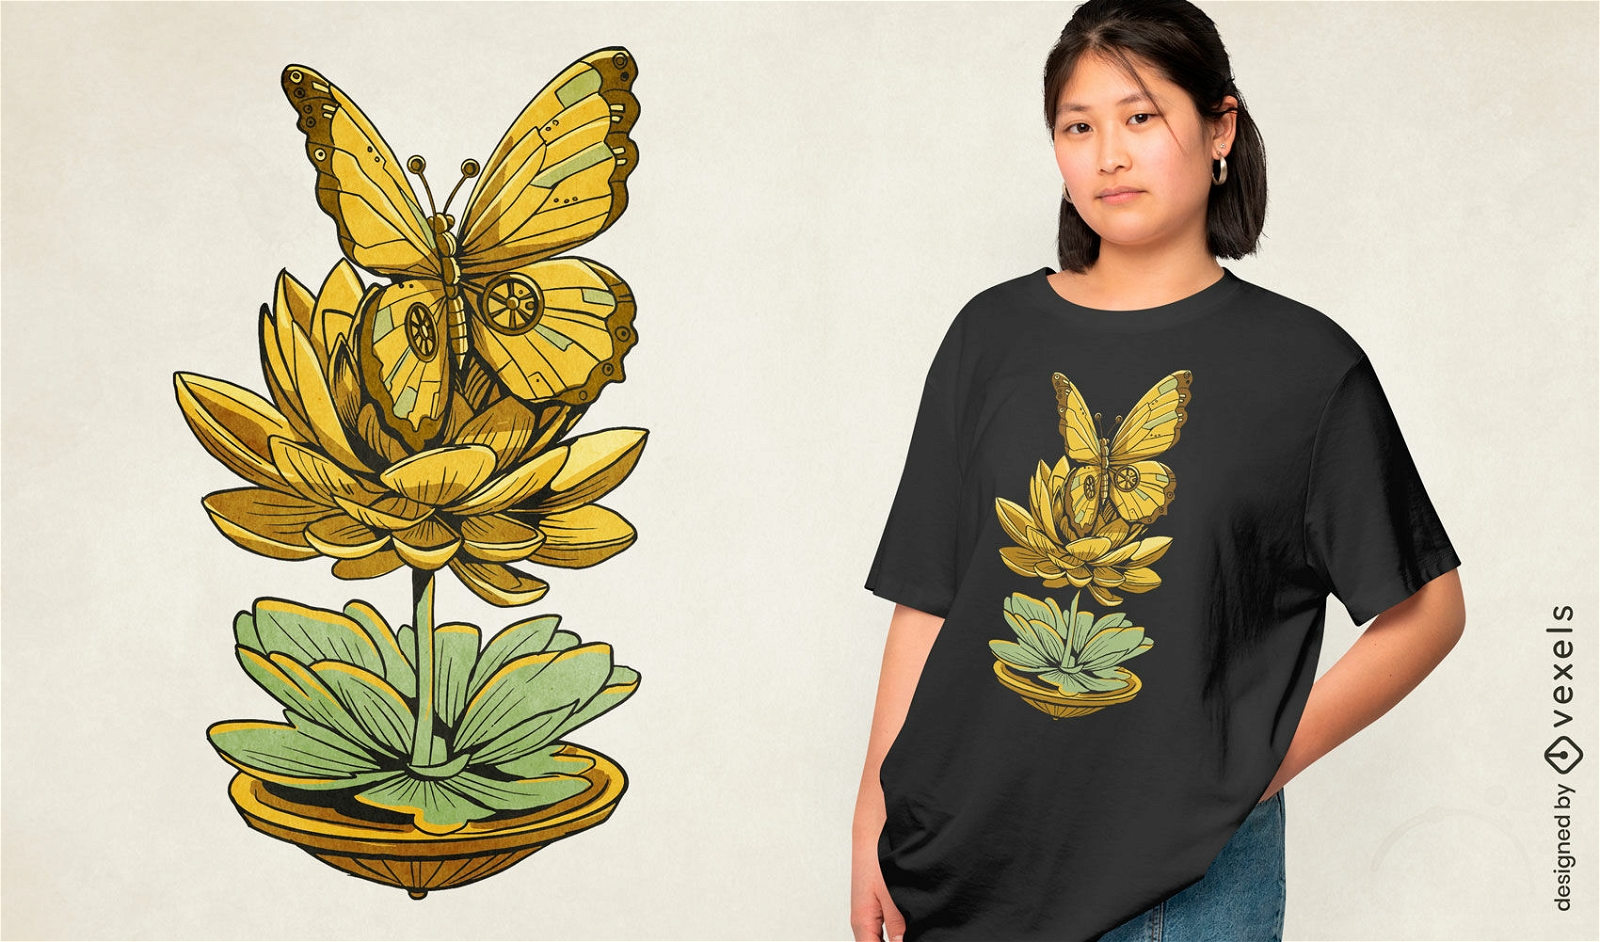 Diseño de camiseta de mariposa inspirada en Steampunk.